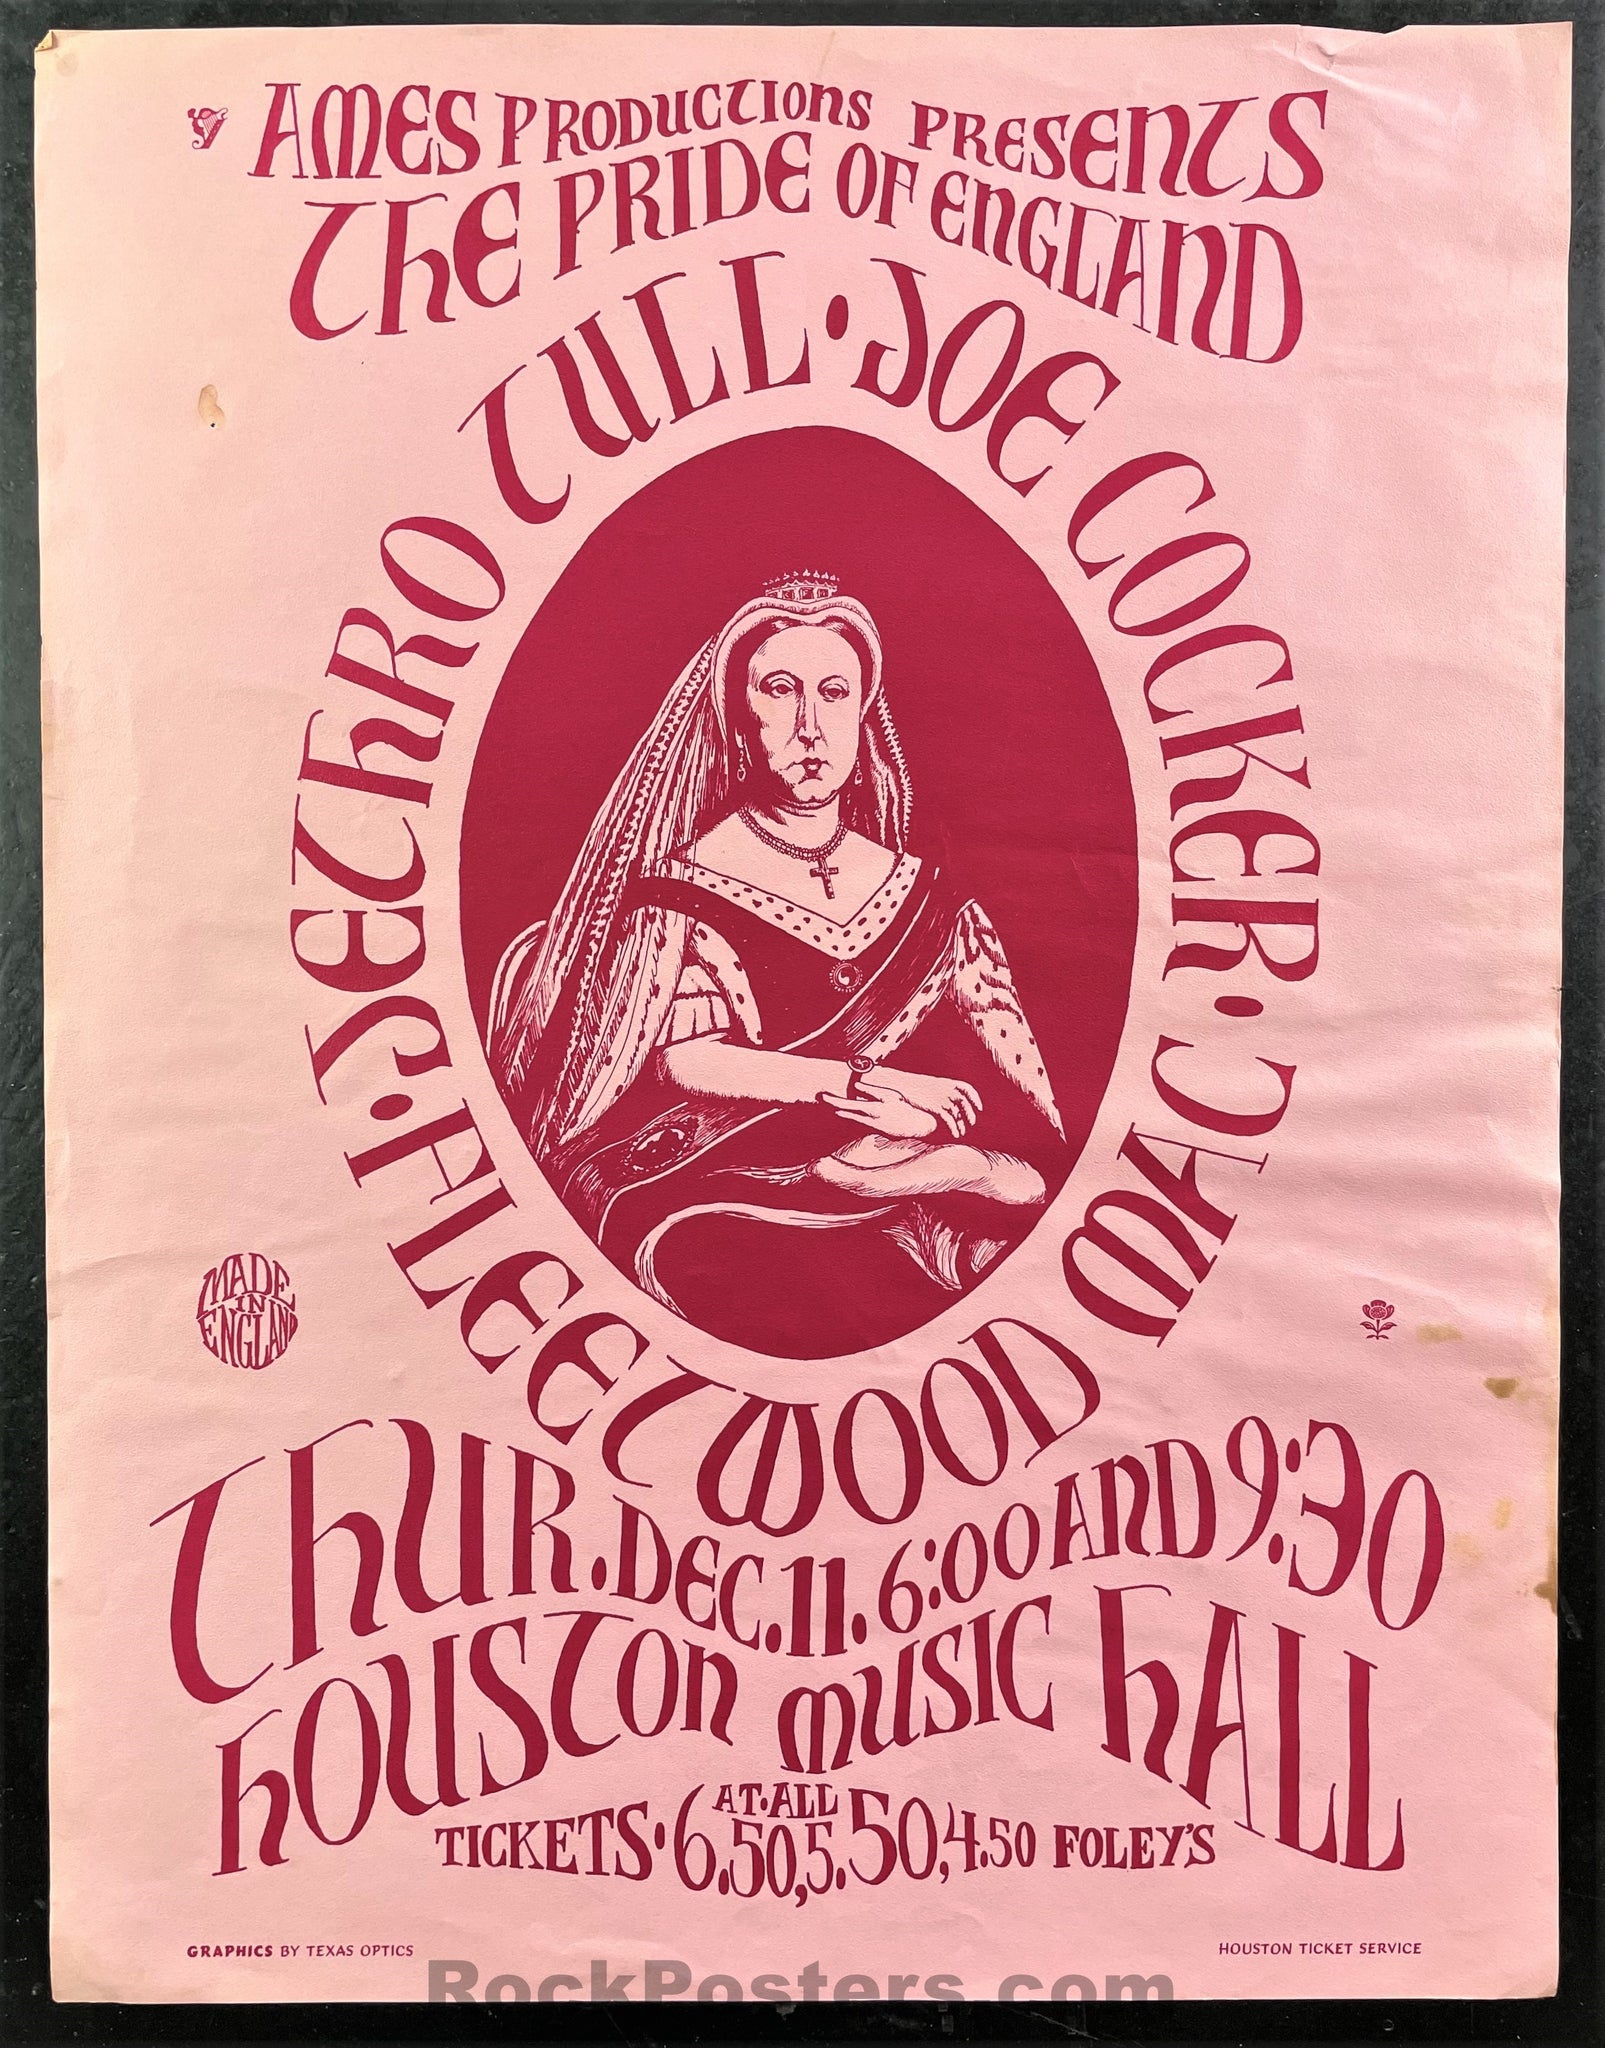 AUCTION - Joe Cocker Fleetwood Mac Jethro Tull - 1969 Poster - Houston - Very Good